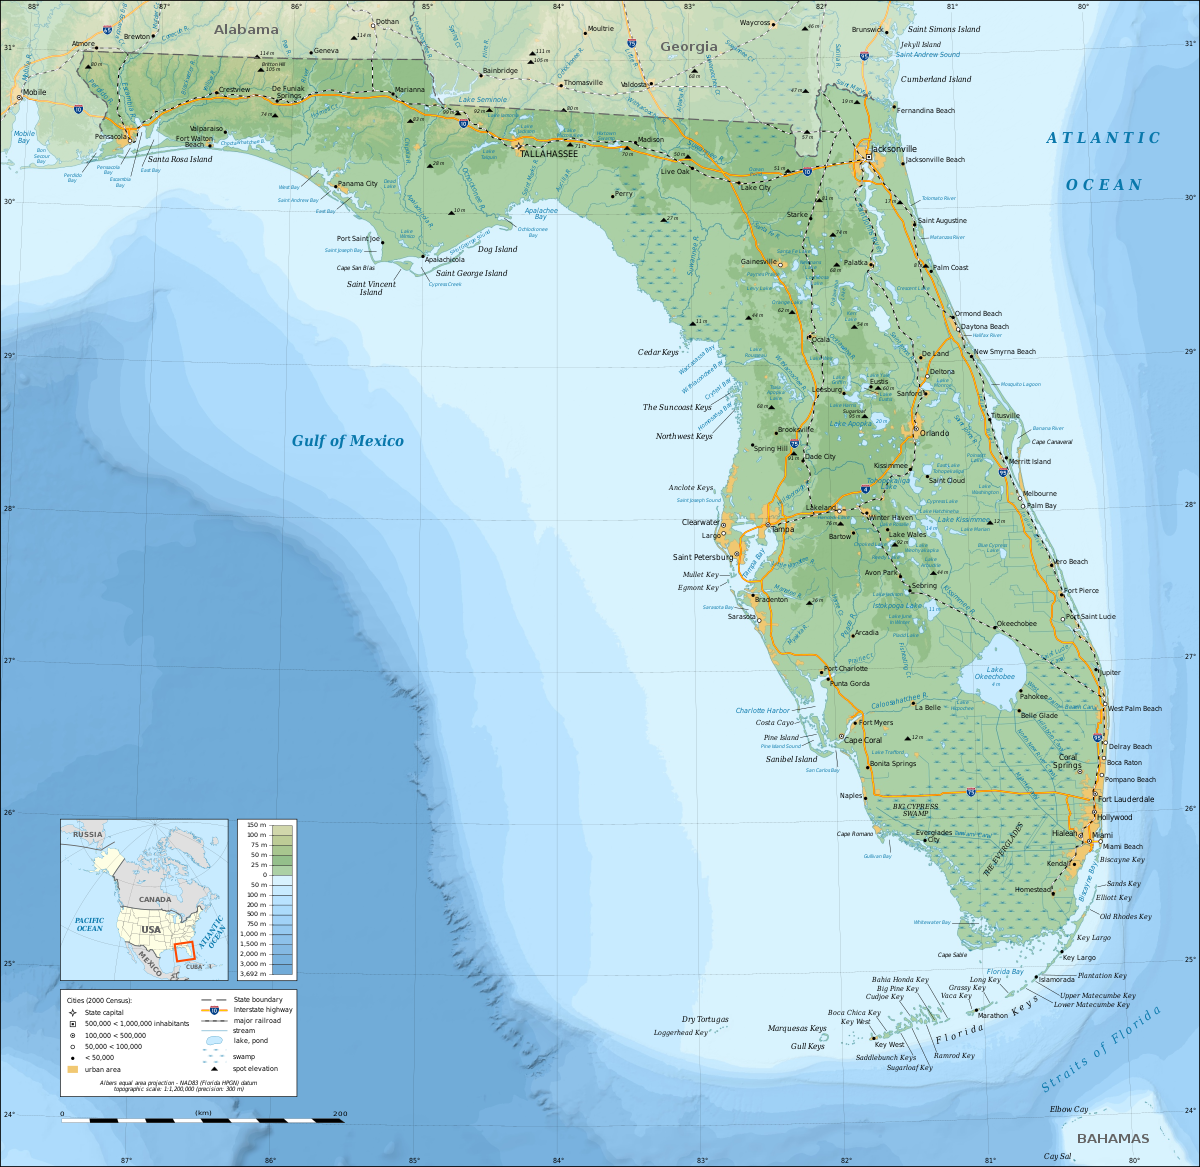 Geography: The Florida Keys